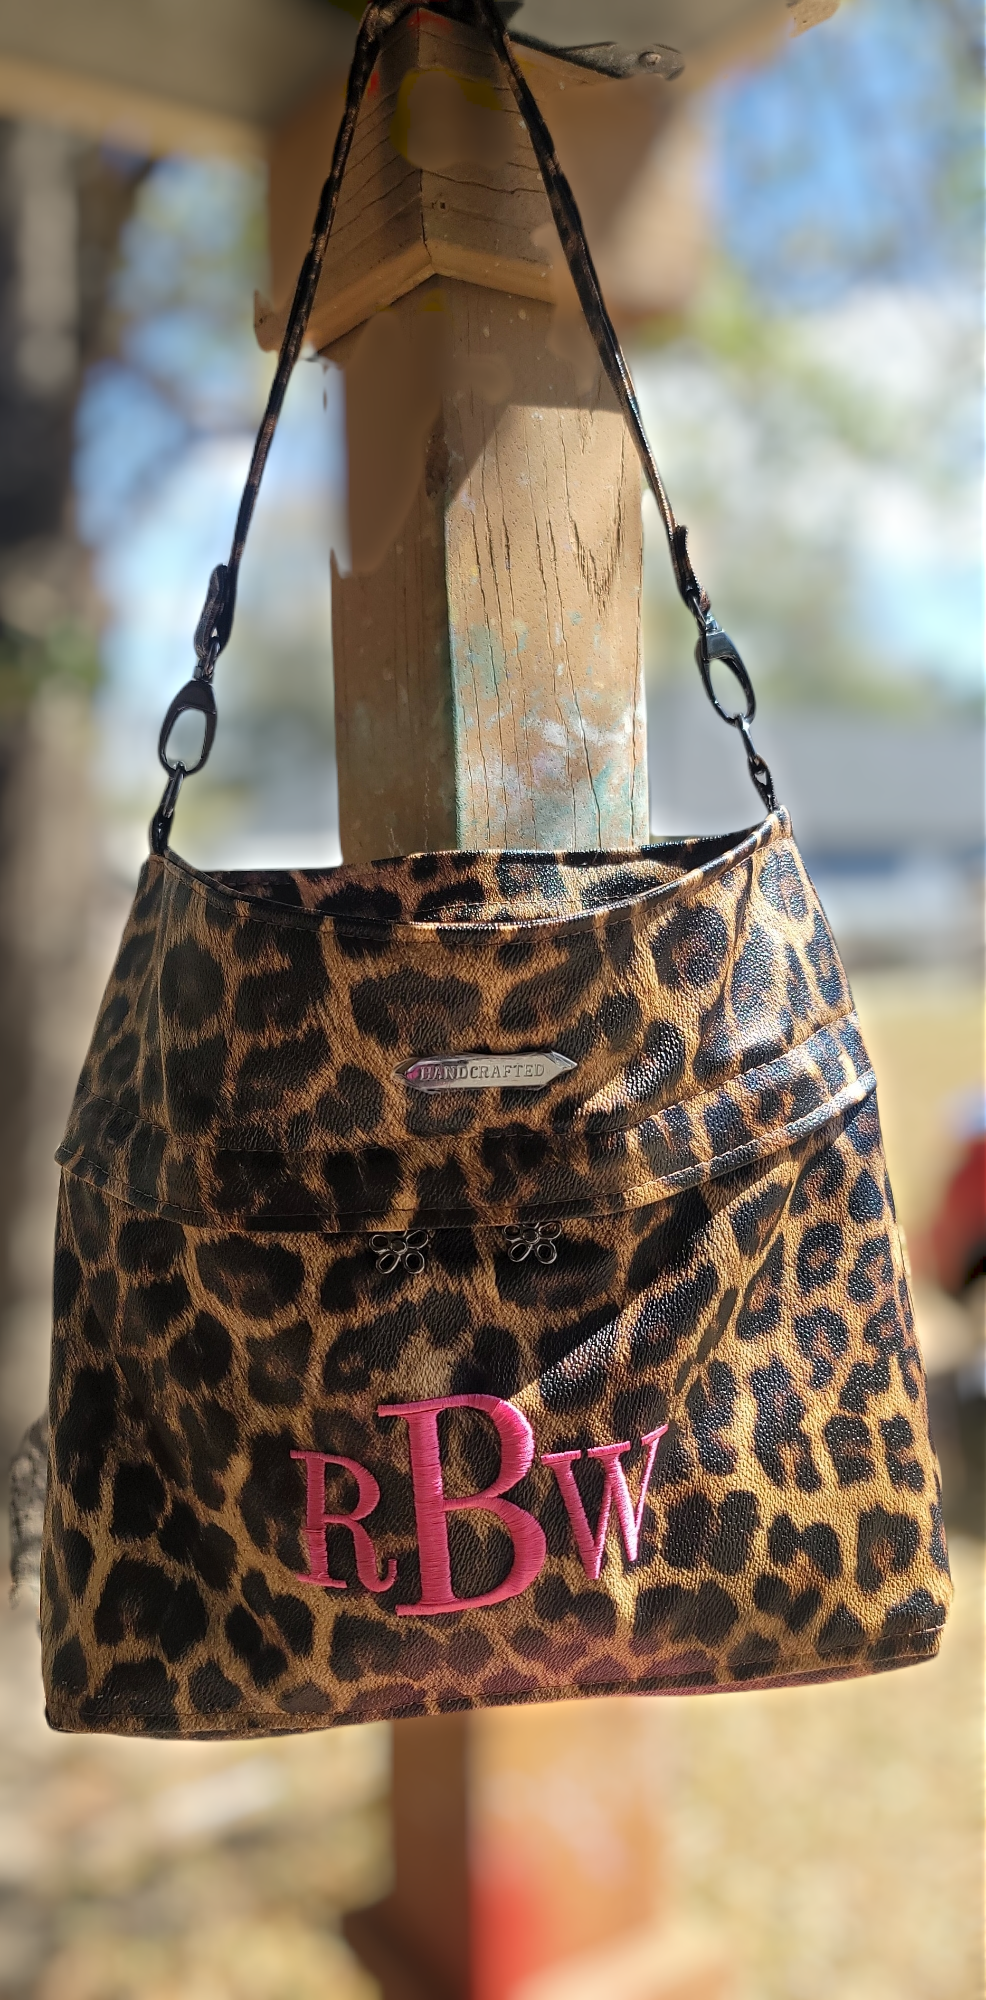 Customize Leopard Hobo Bag